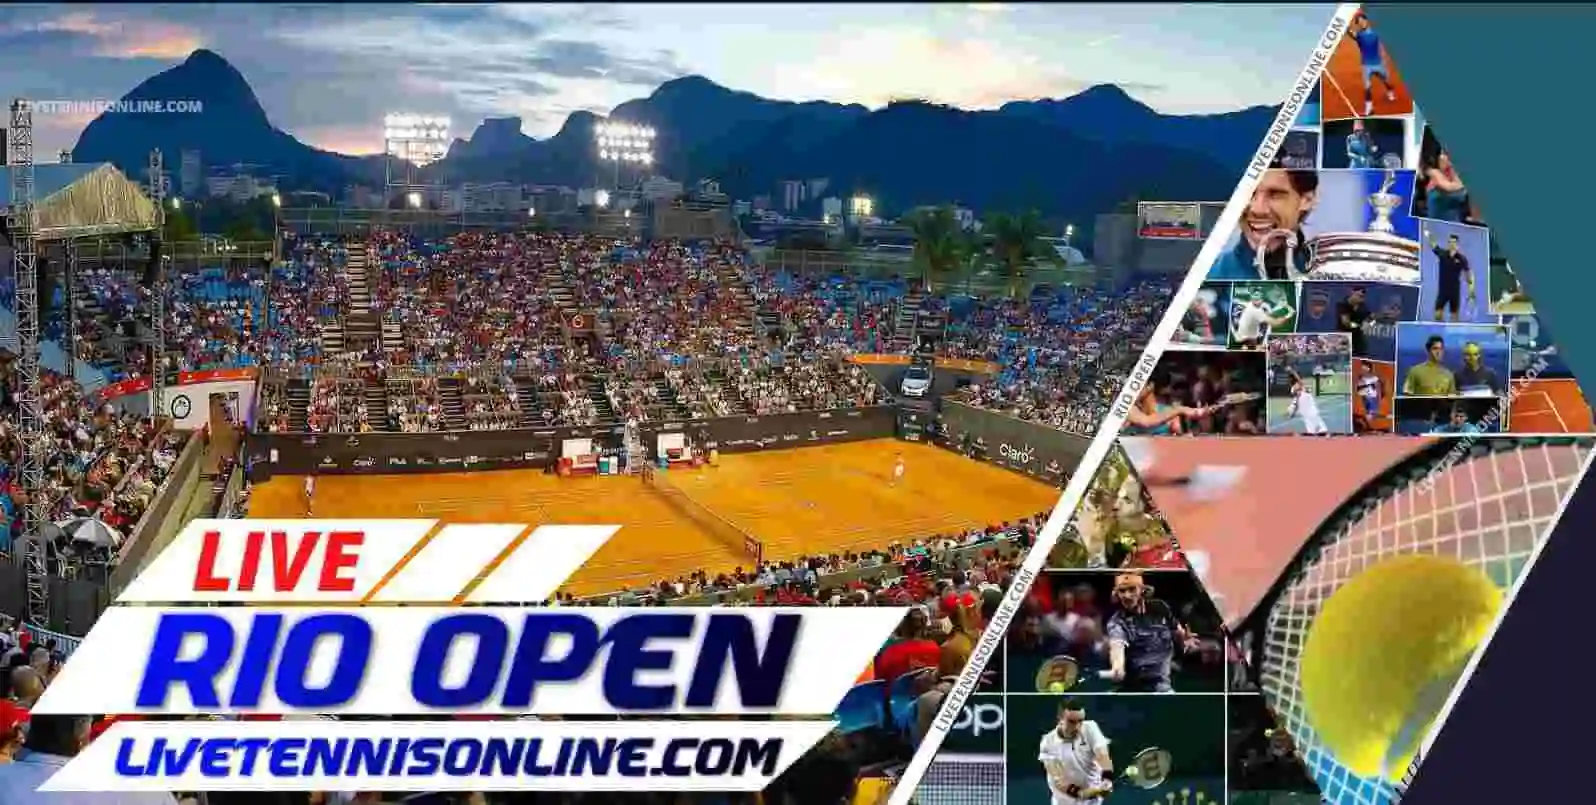 Rio Open Tennis Stream 2019